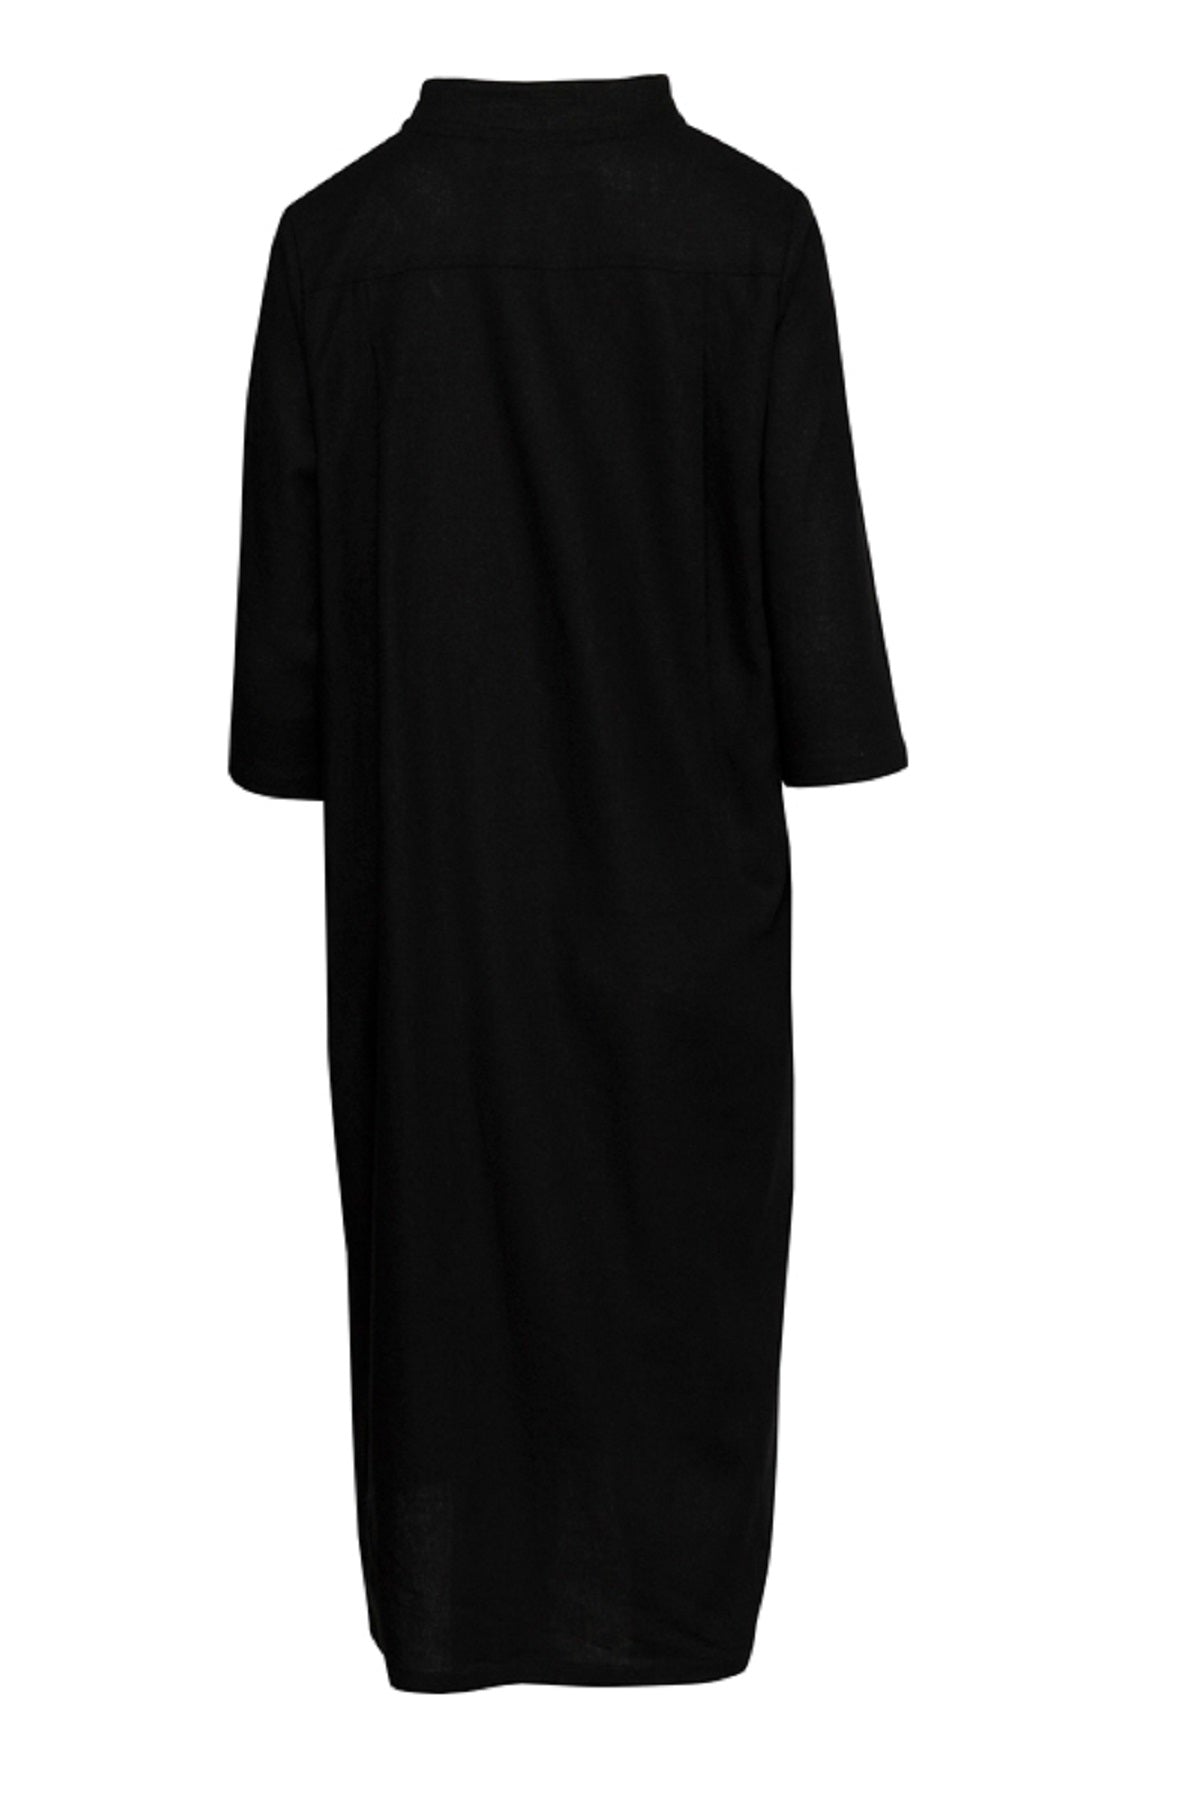 E Avantgarde dress 13455-99, Black